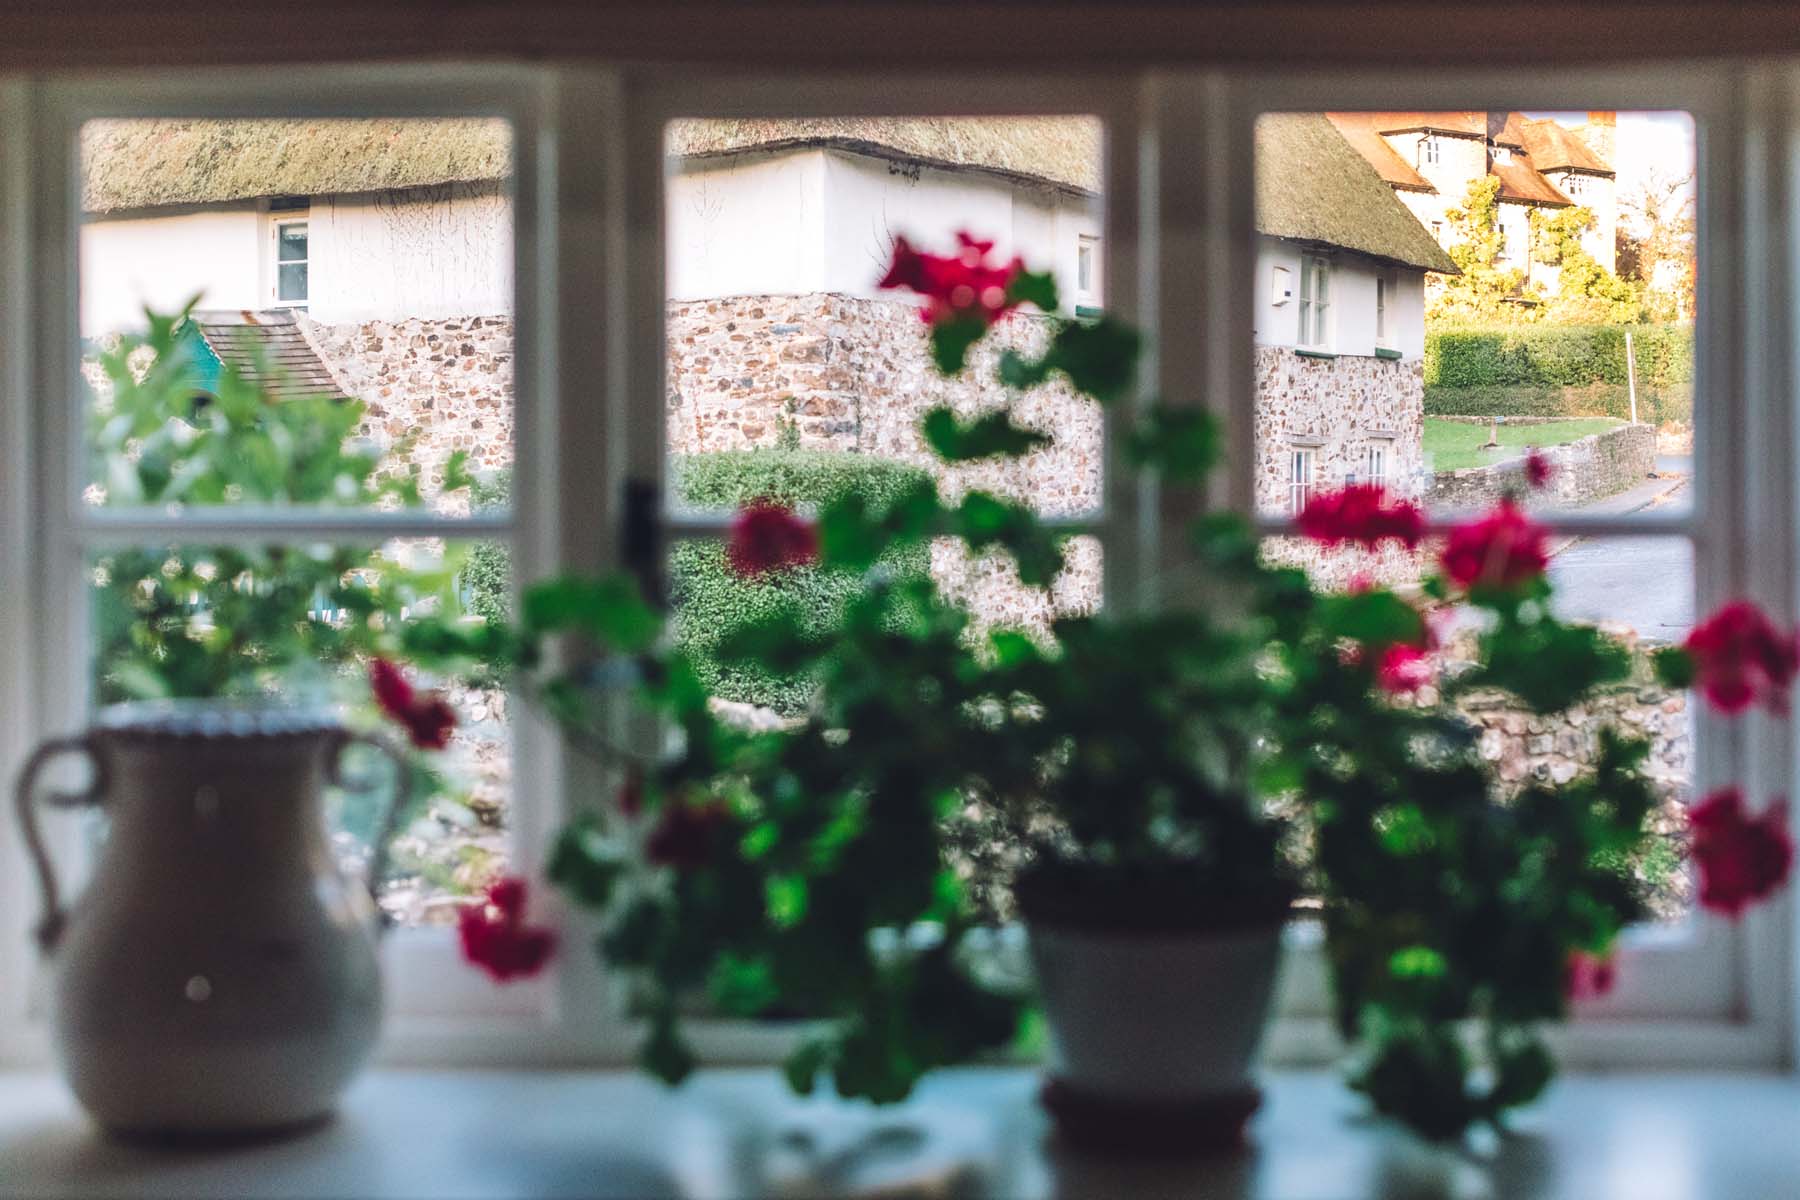 Flowers on a kitchen window sill